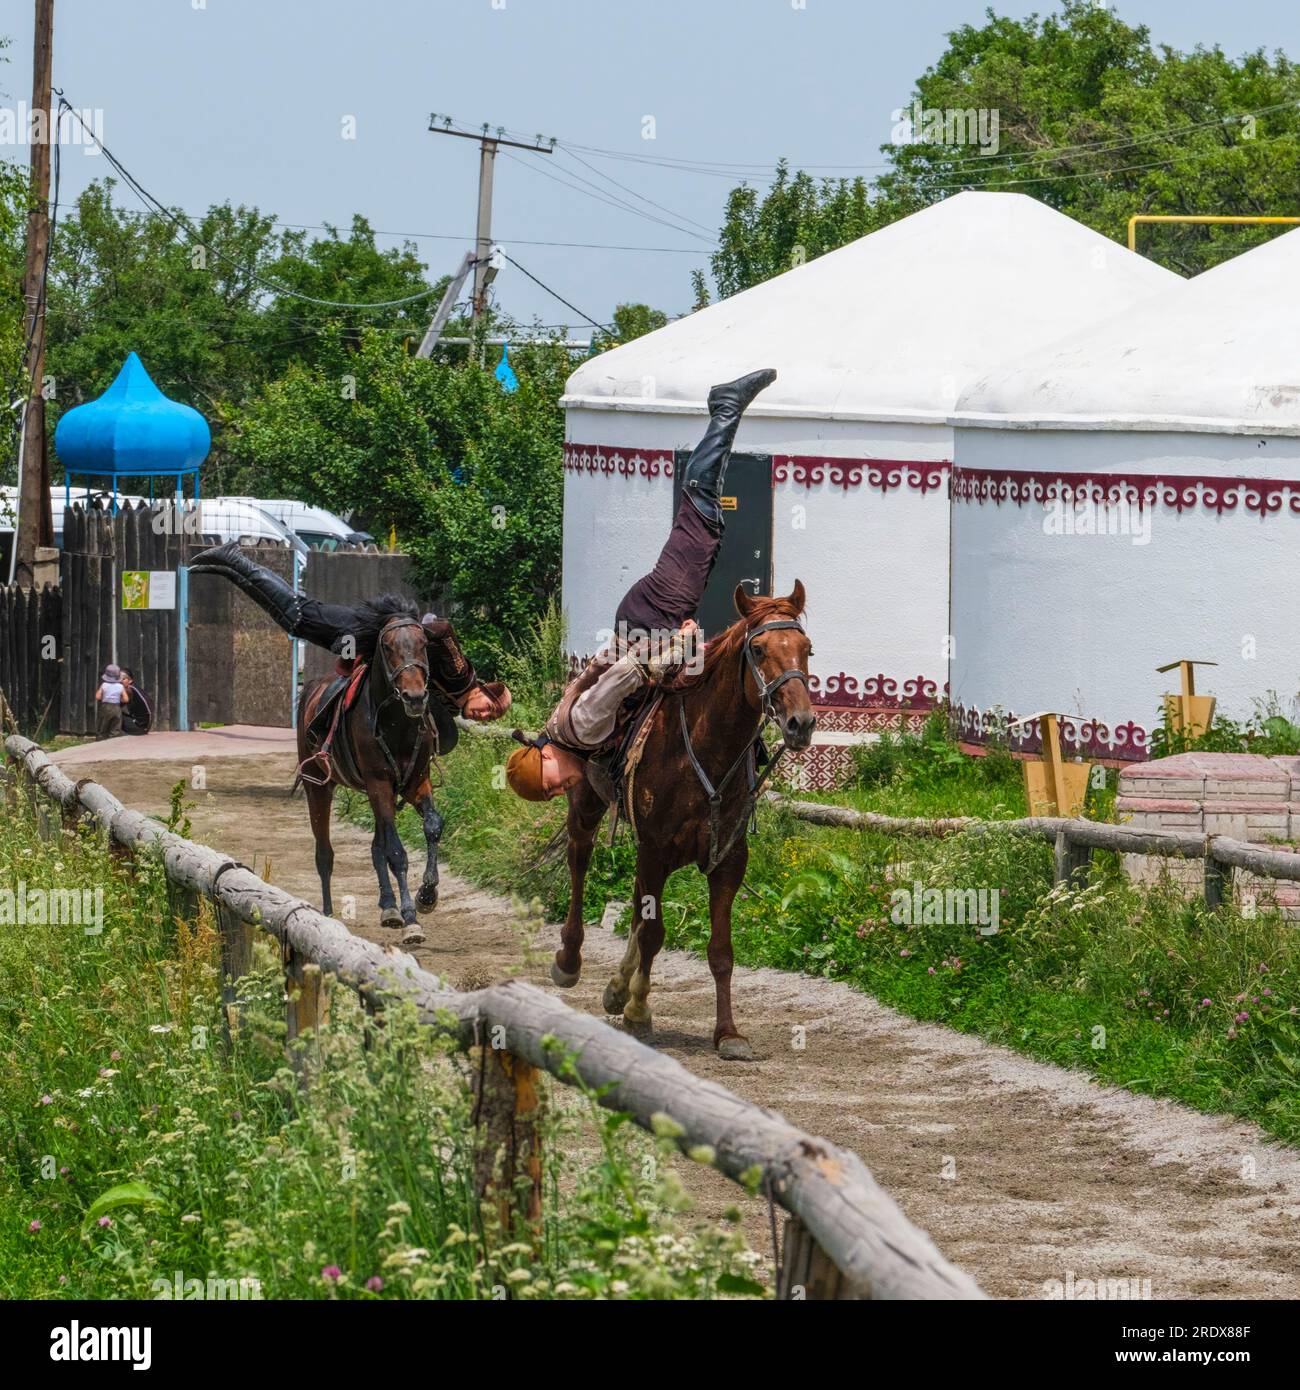 Kazakhstan, Huns Ethno Village. Demonstration of Traditional Kazakh Nomadic Riding Skill. Stock Photo